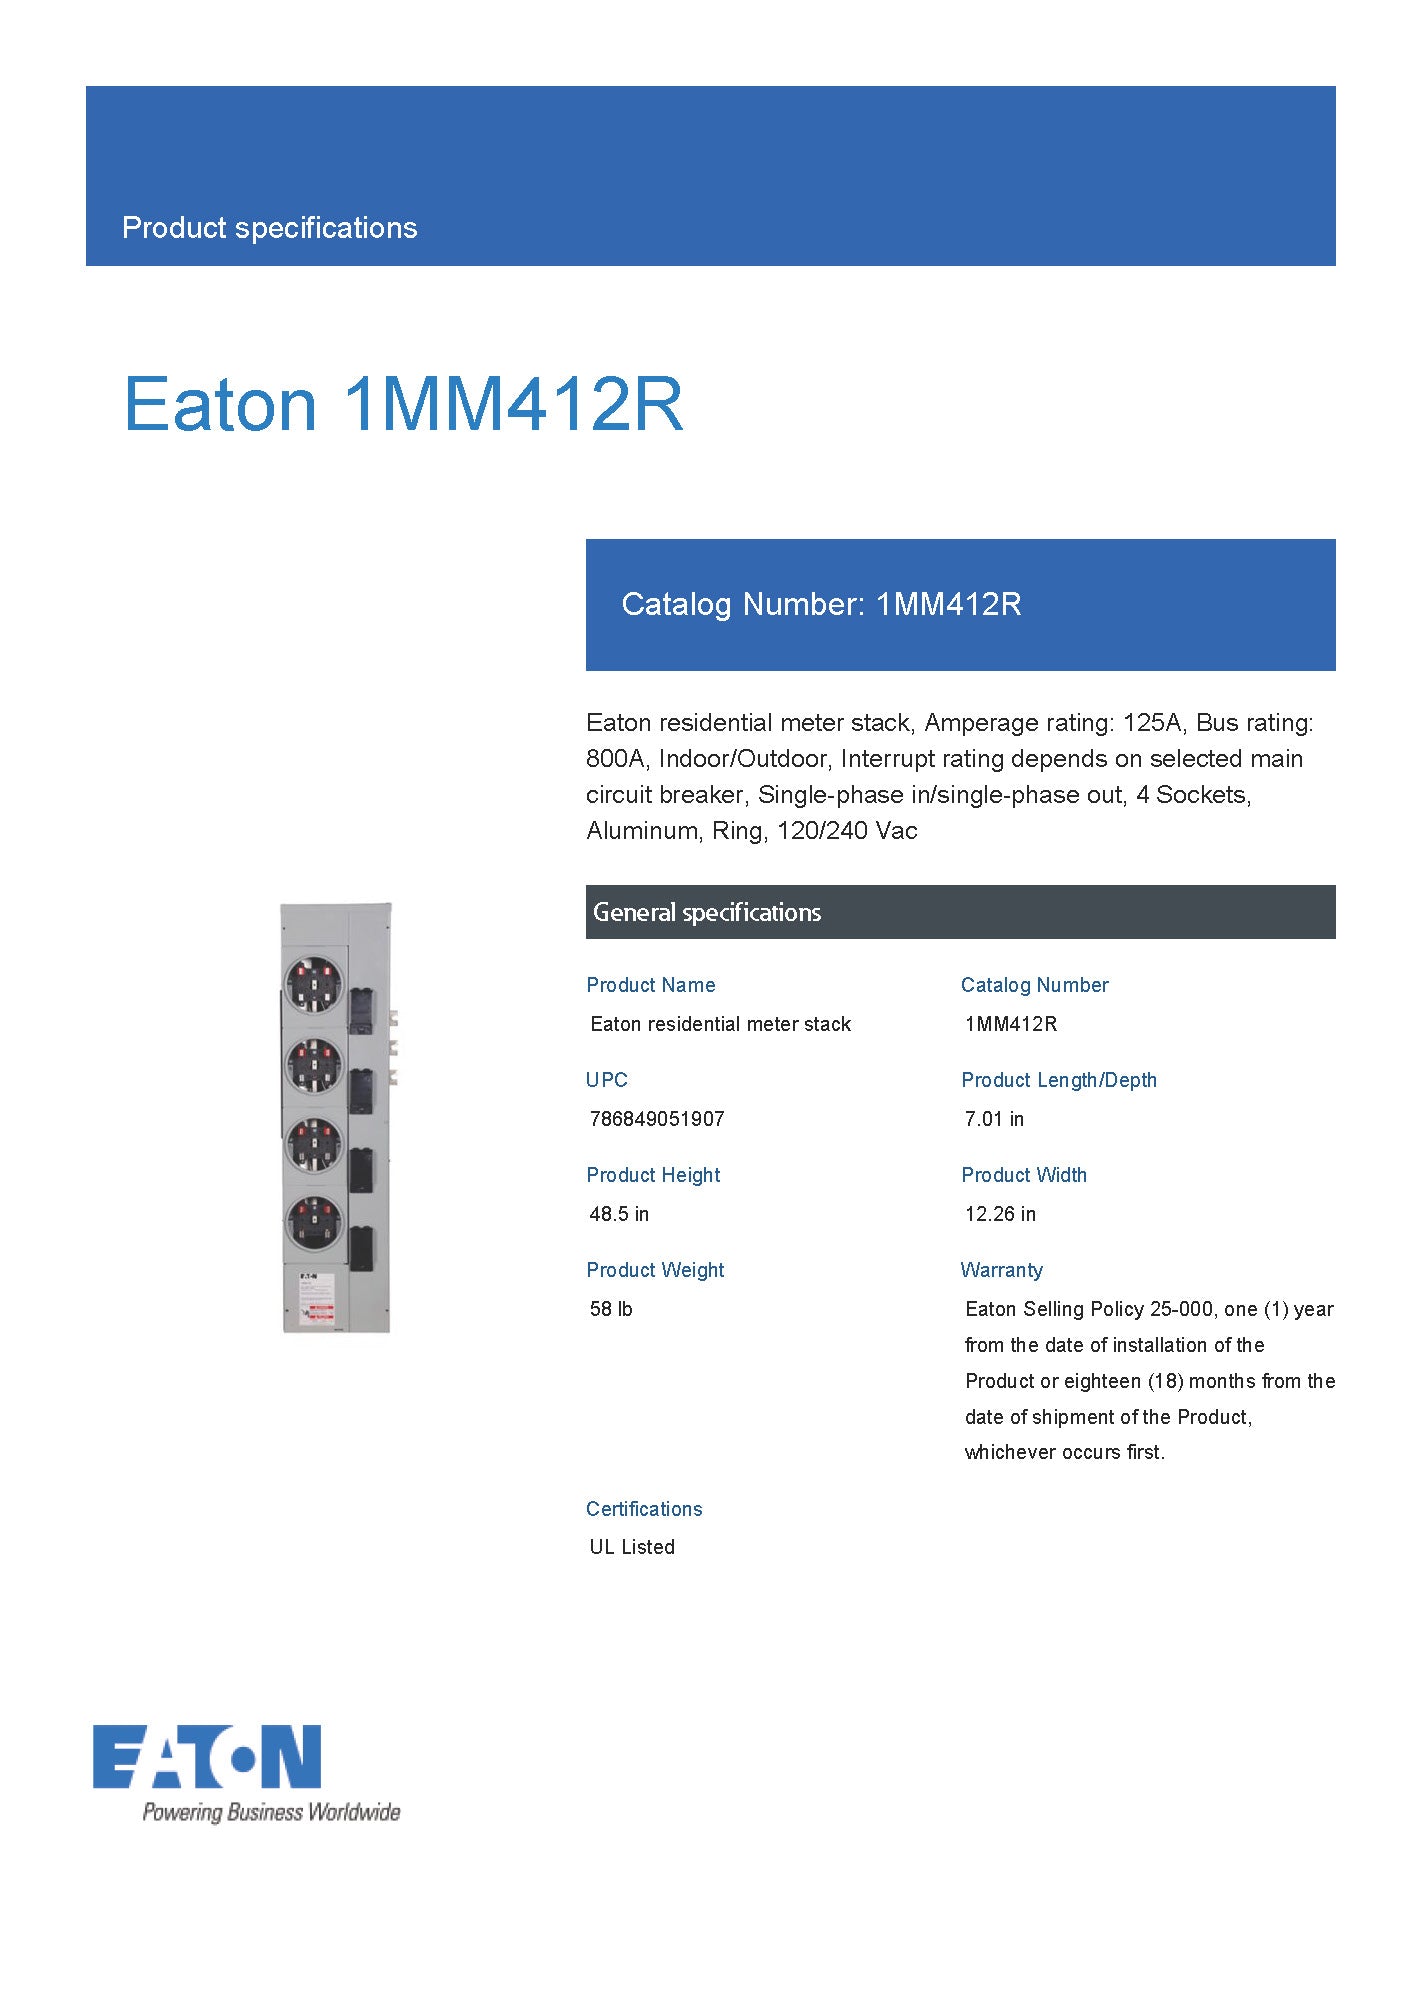 Eaton 1MM412R Single Phase 4-Gang 125A Socket Ringed Meter Stack